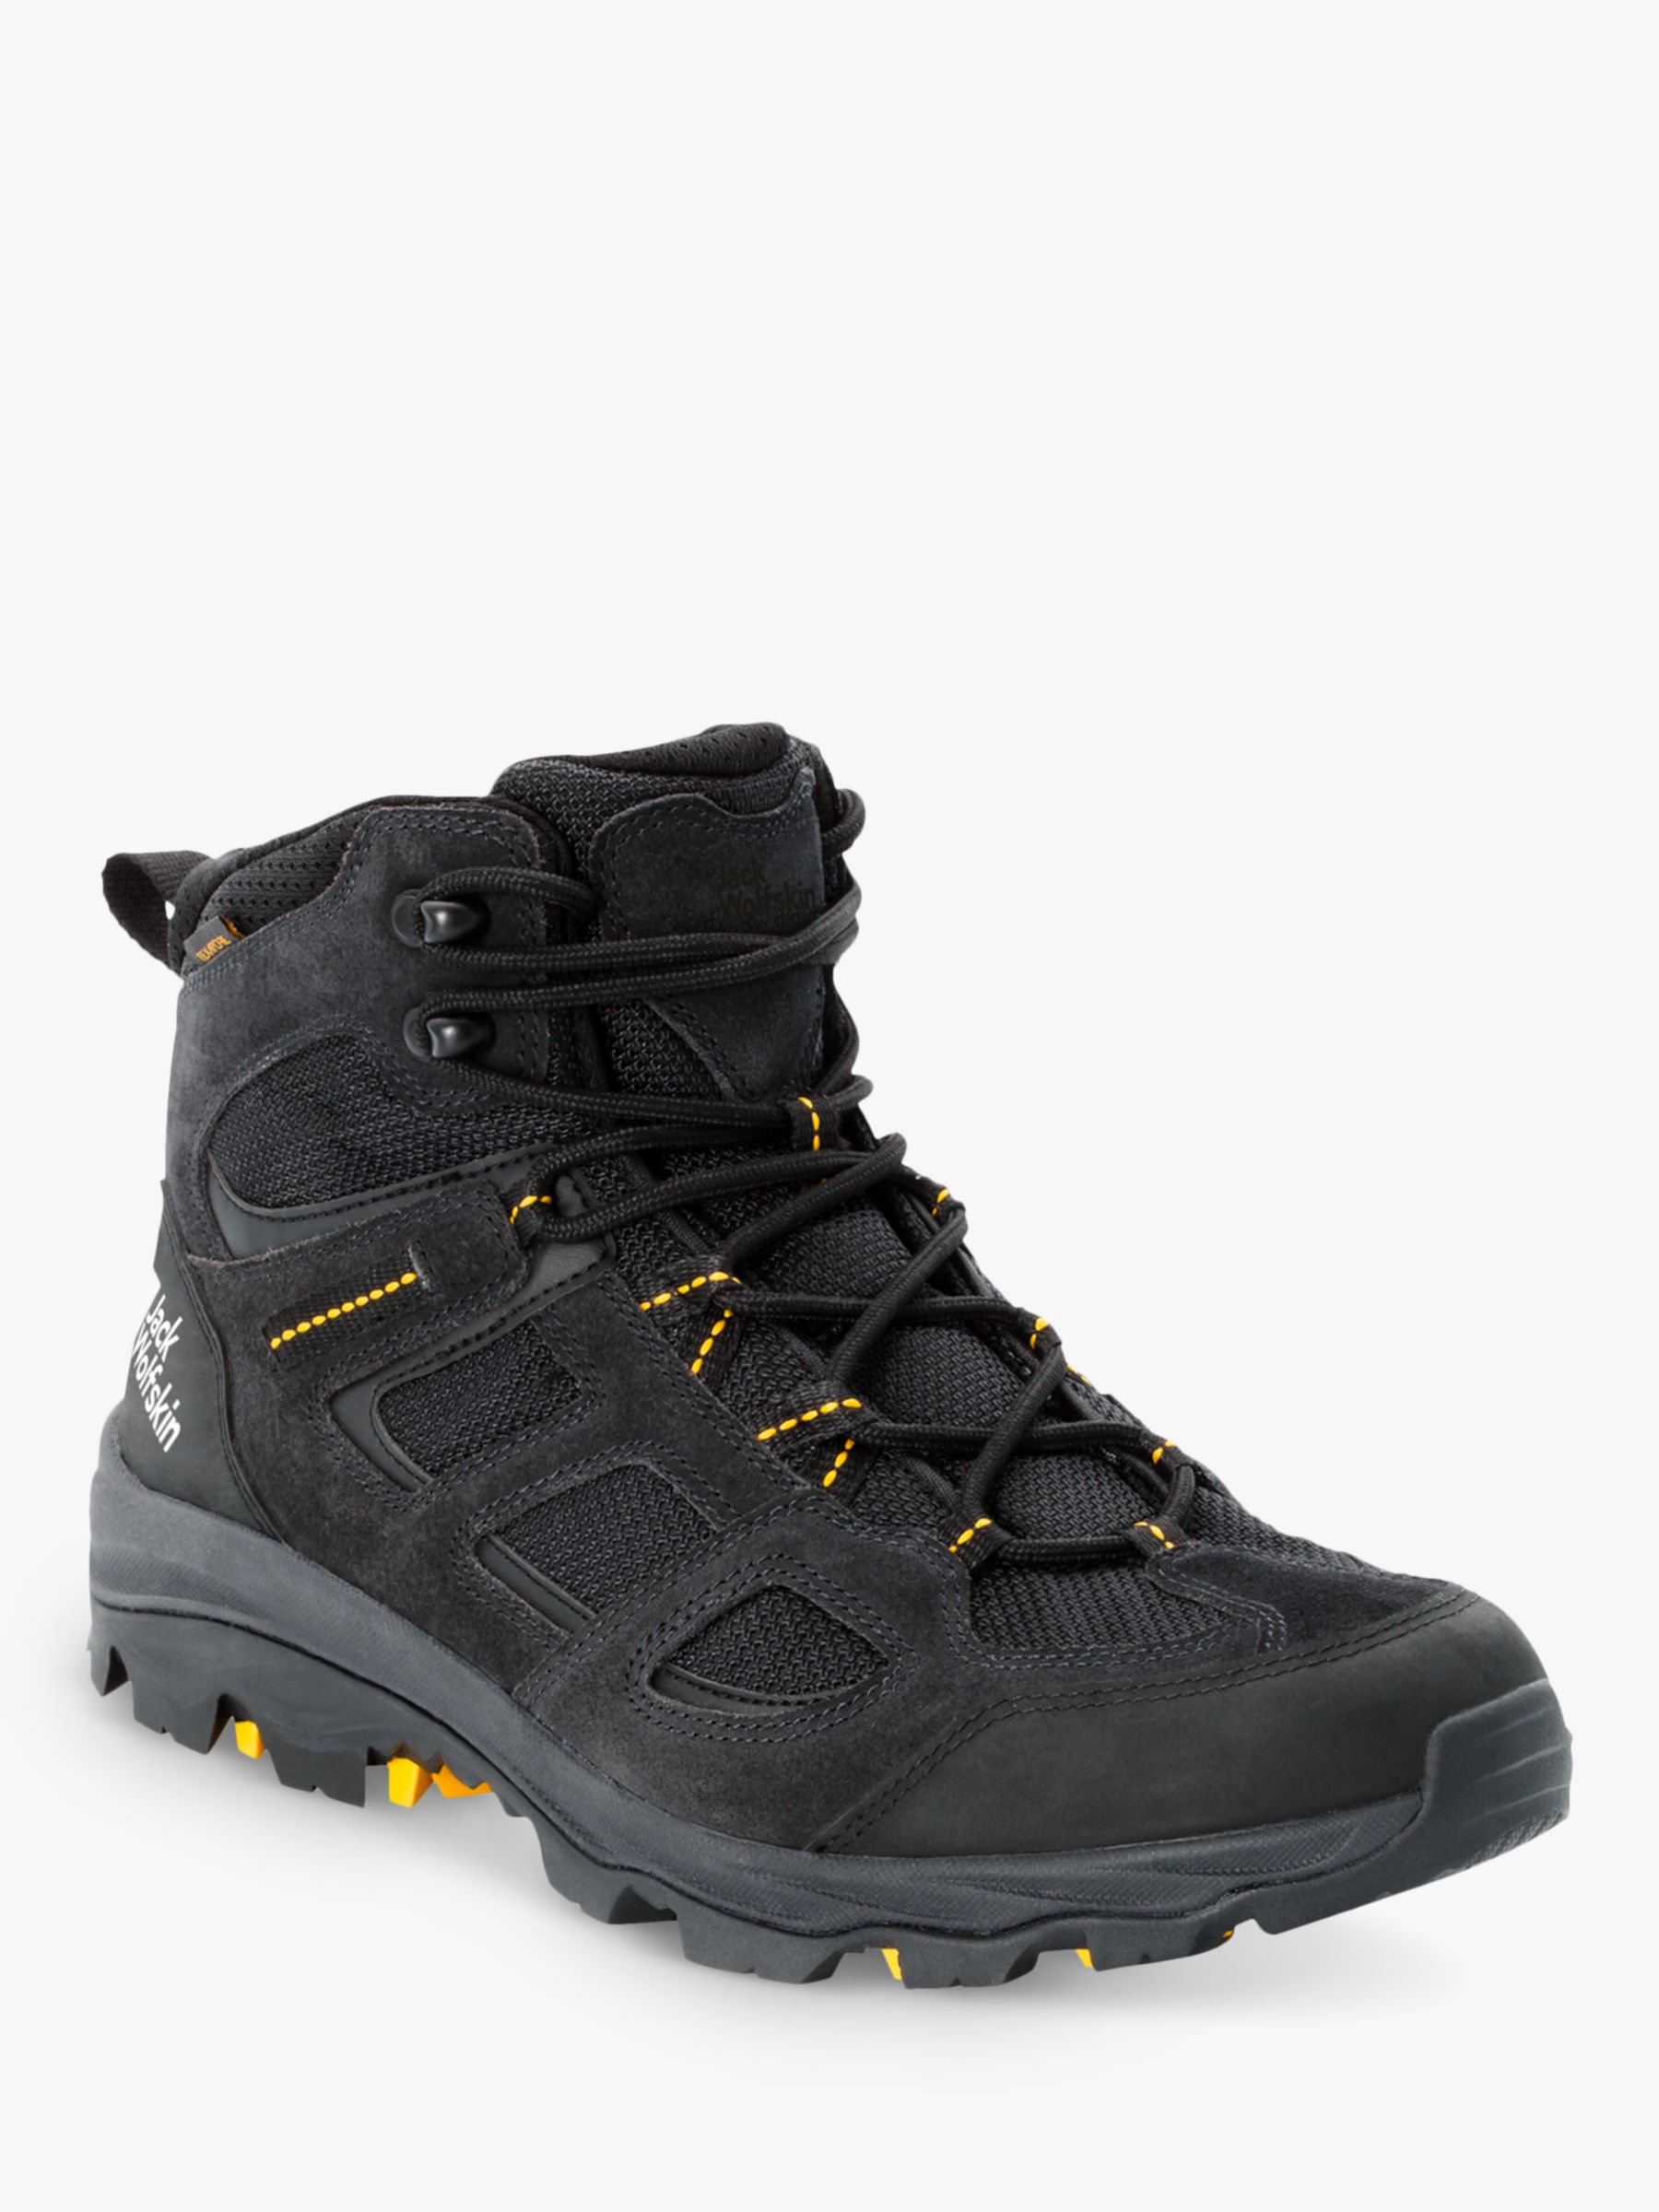 Jack Wolfskin Vojo 3 Texapore Men's Waterproof Walking Boots, Black/Burly Yellow, 7